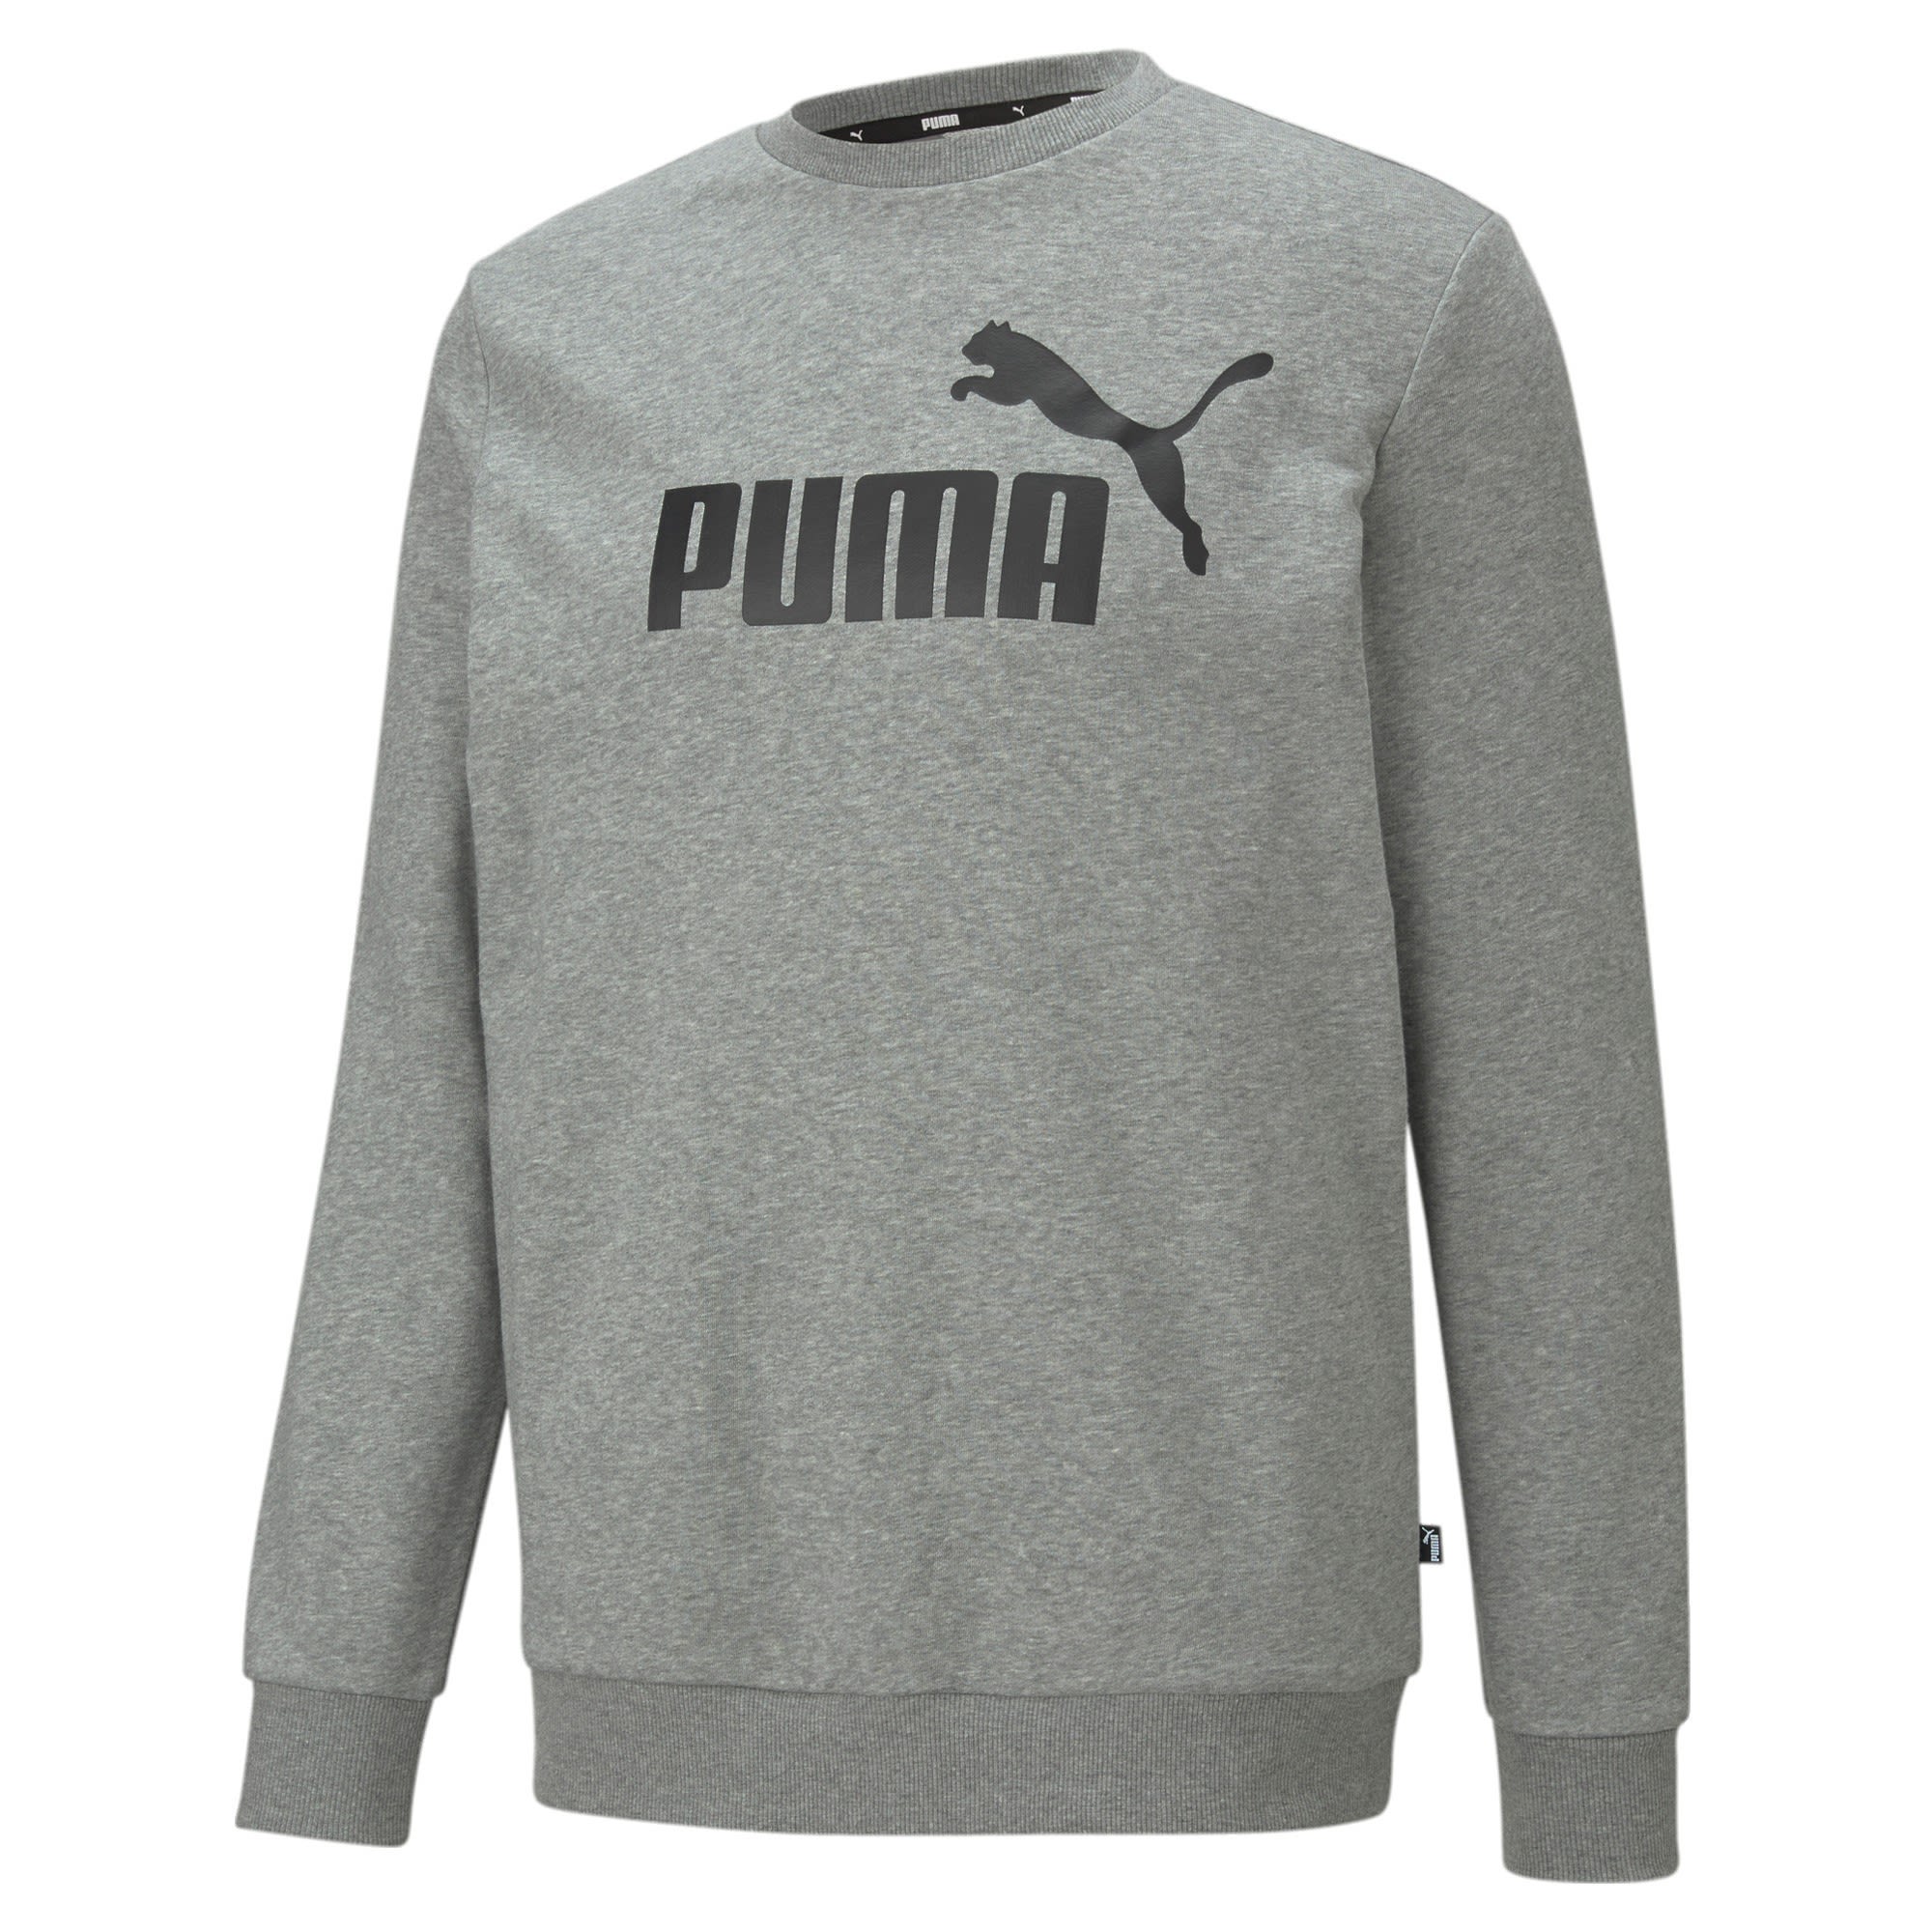 Puma Essentials Big Logo Crew Grau- Male Sweaters und Hoodies- Grsse S - Farbe Medium Gray Heather